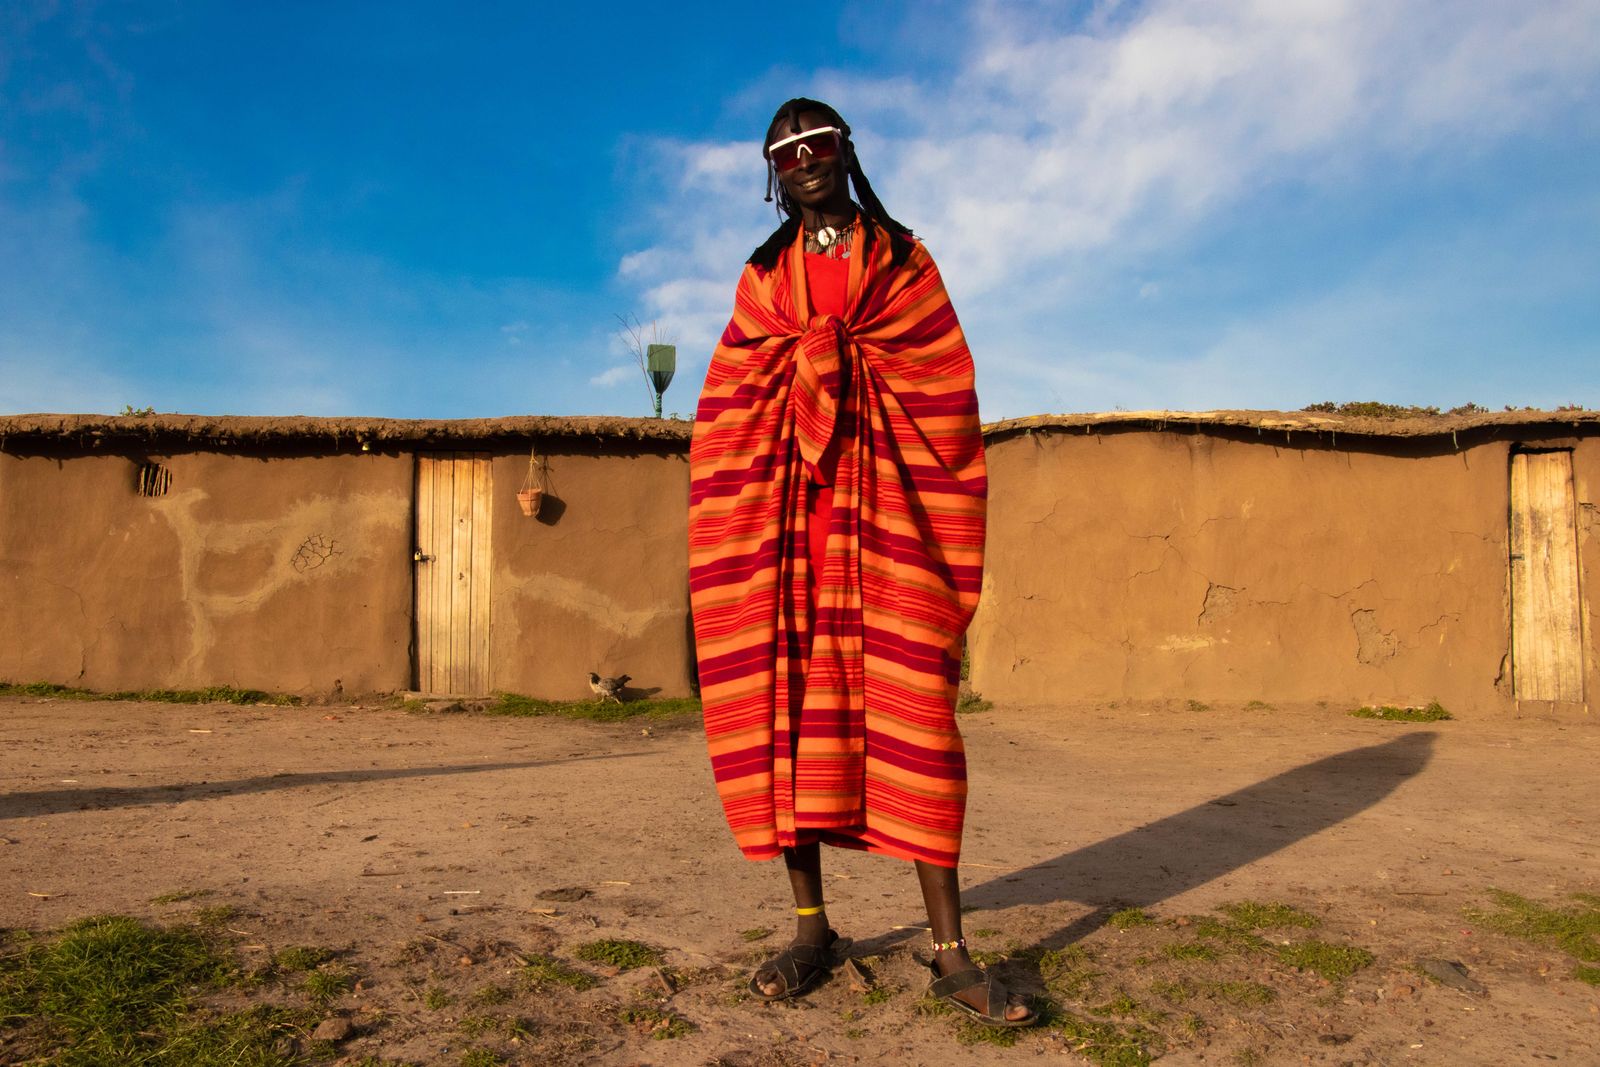 © Nwando Ebeledike - Community leader of the Massai Mara Community, Kenya